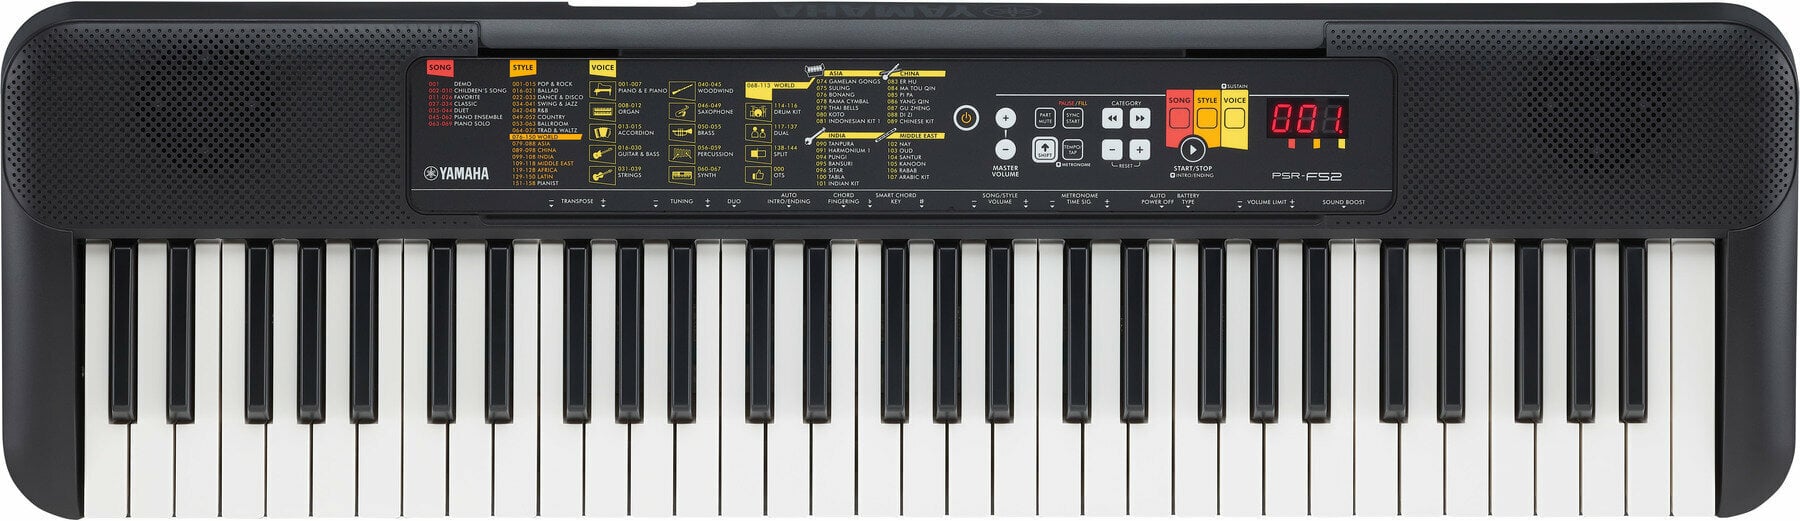 Keyboards ohne Touch Response Yamaha PSR-F52